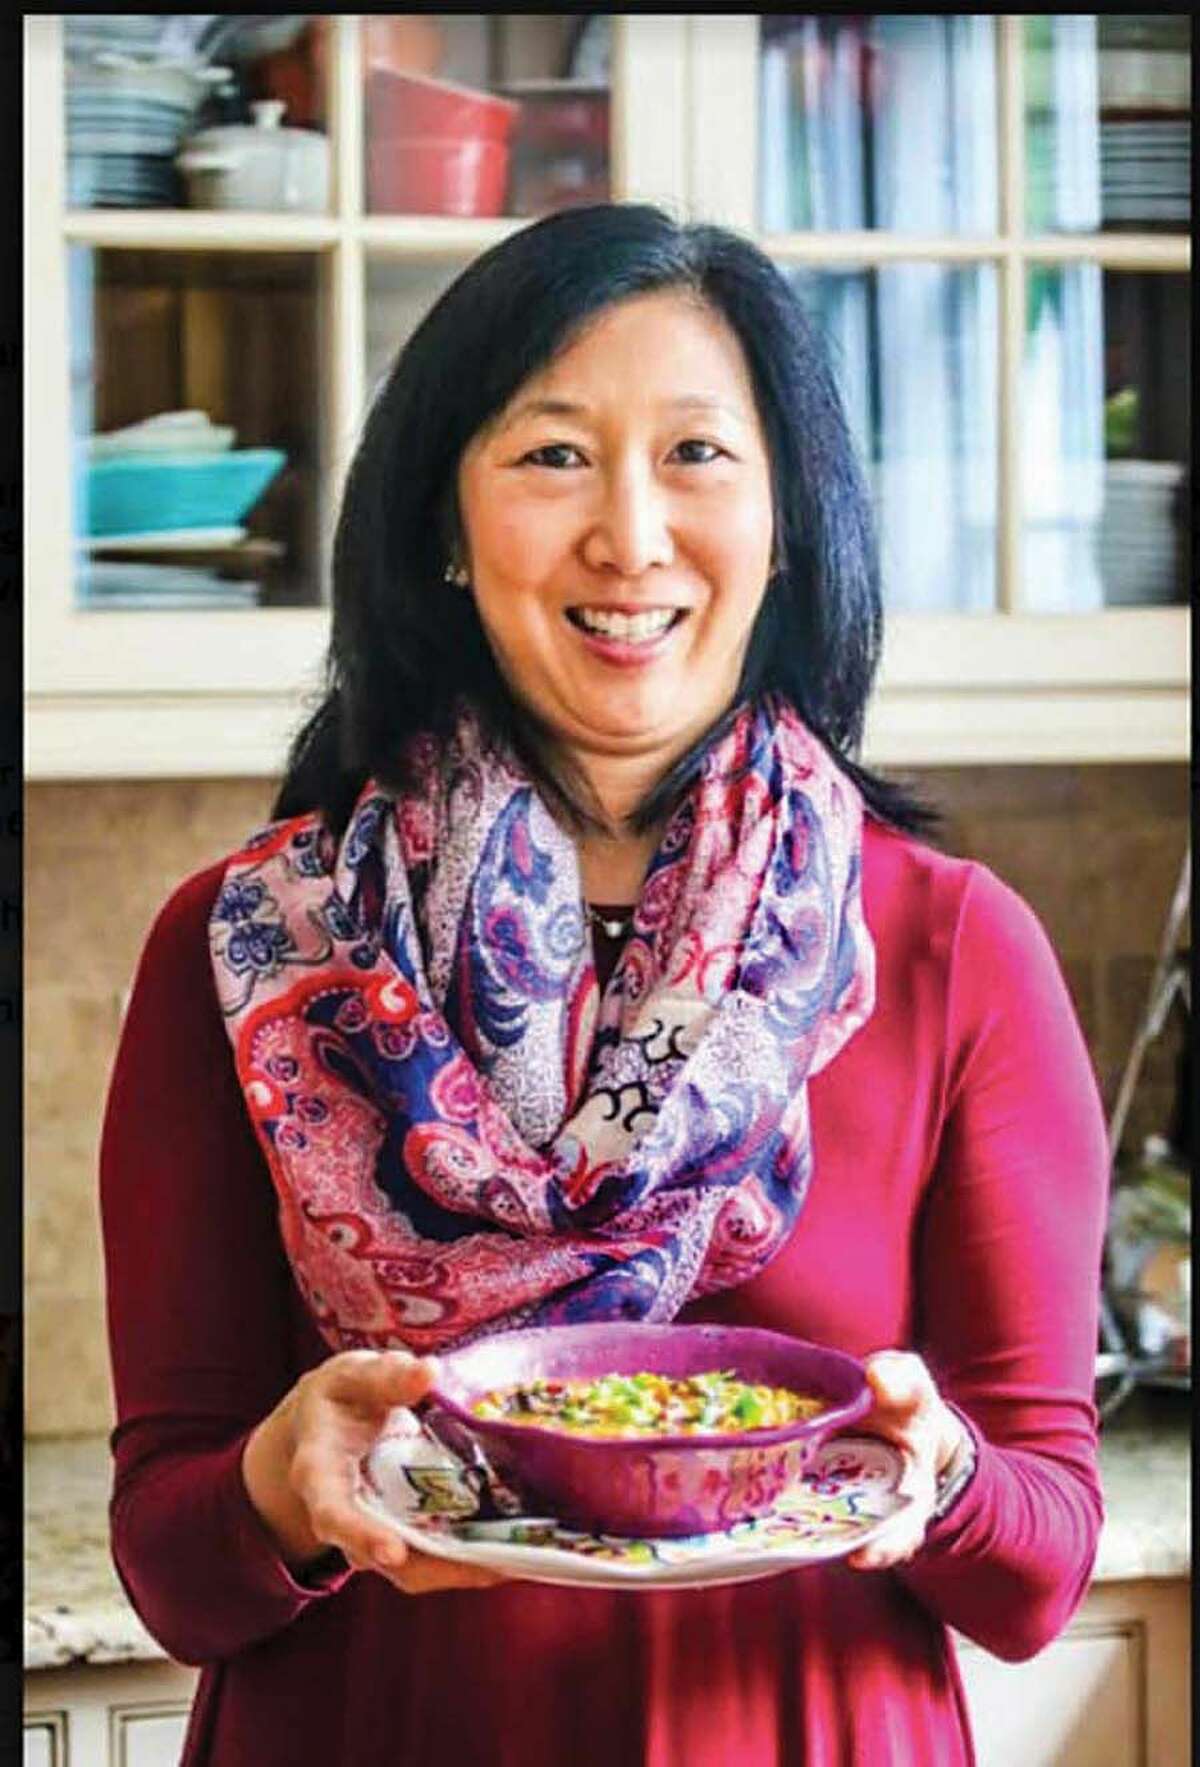 Jeanette Chen in her kitchen.